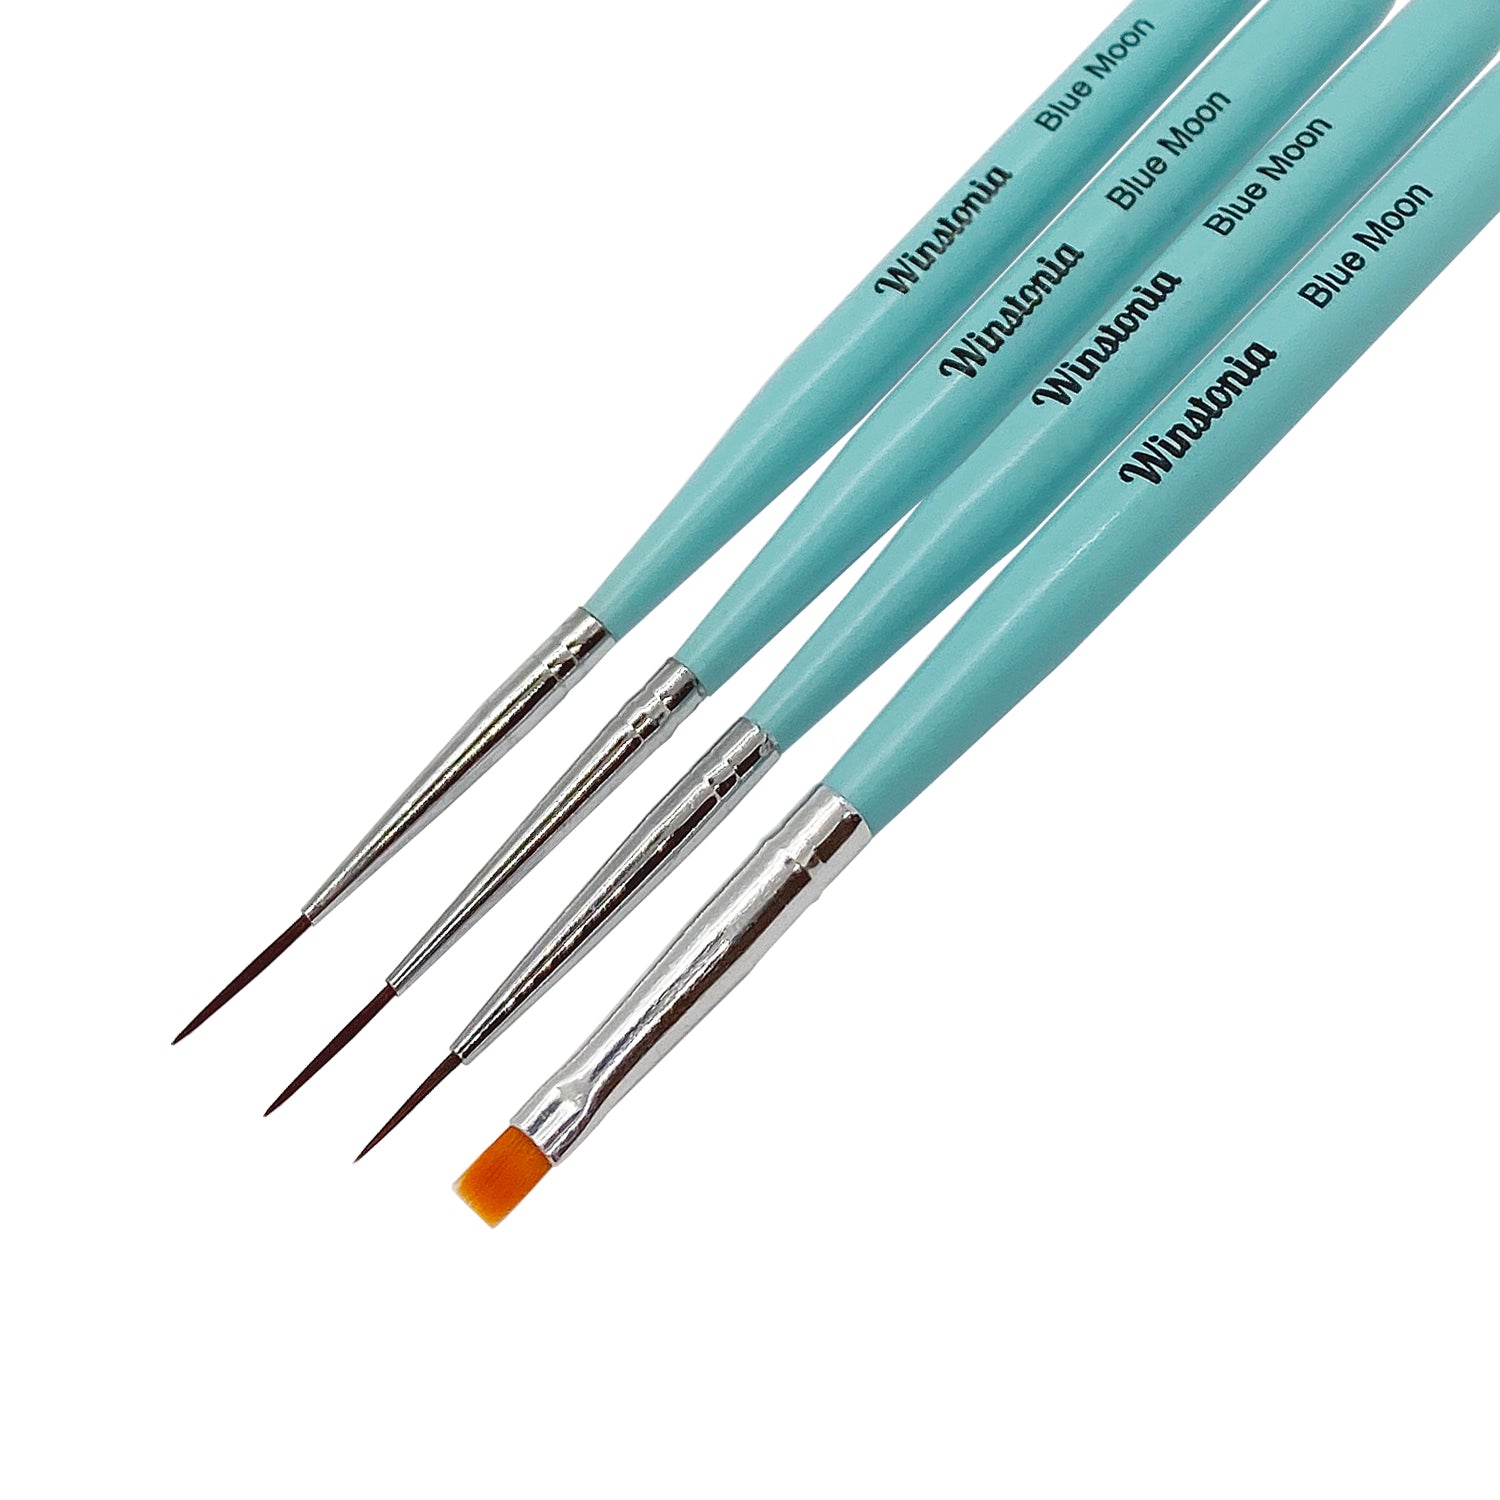 4 Pcs Nail Art Striping & Flat Brushes Set | BLUE MOON